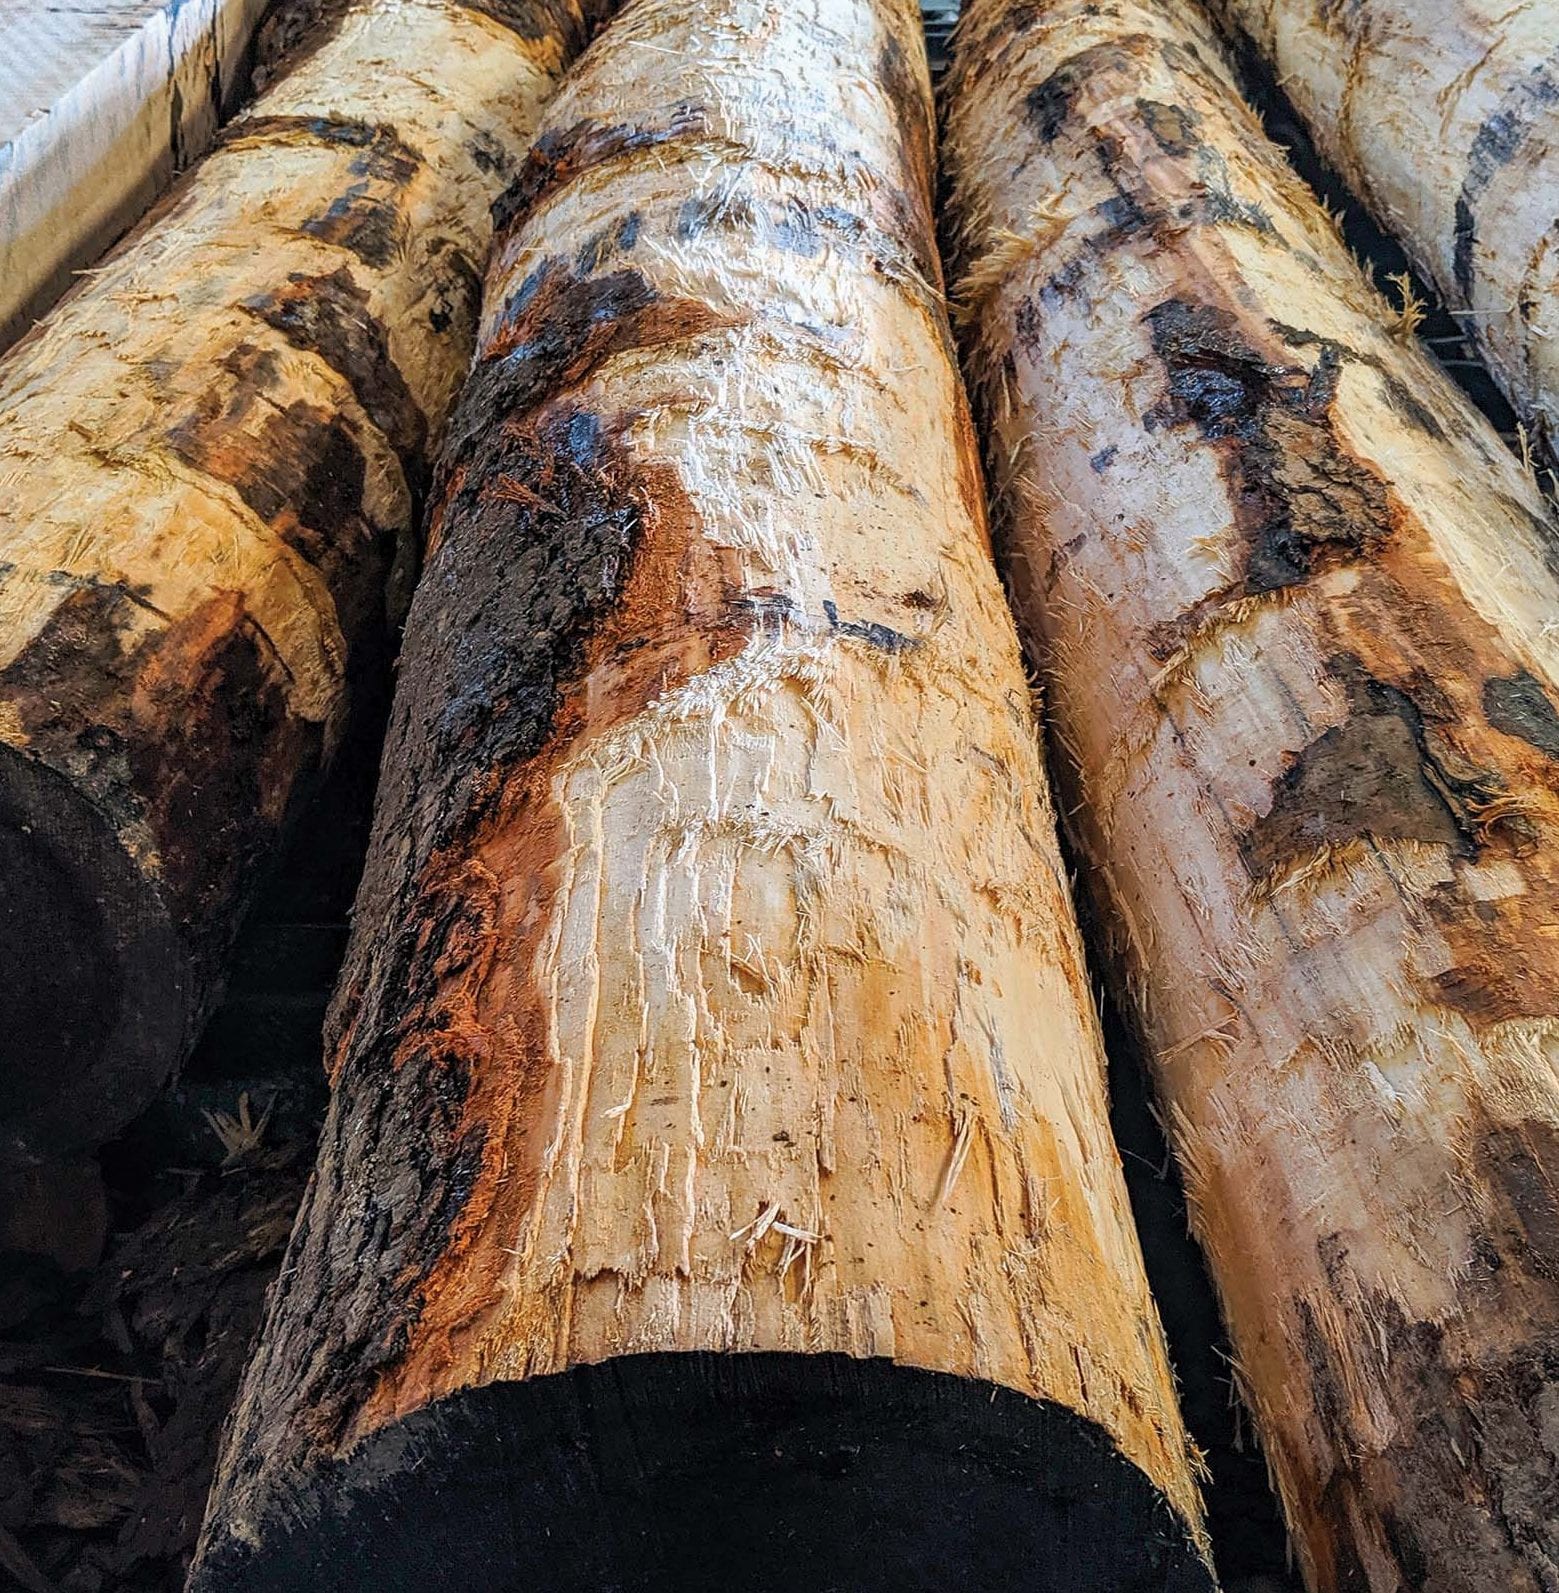 2019 OFBF Board trip to Marietta Ohio - Haessly Hardwood Lumber Company